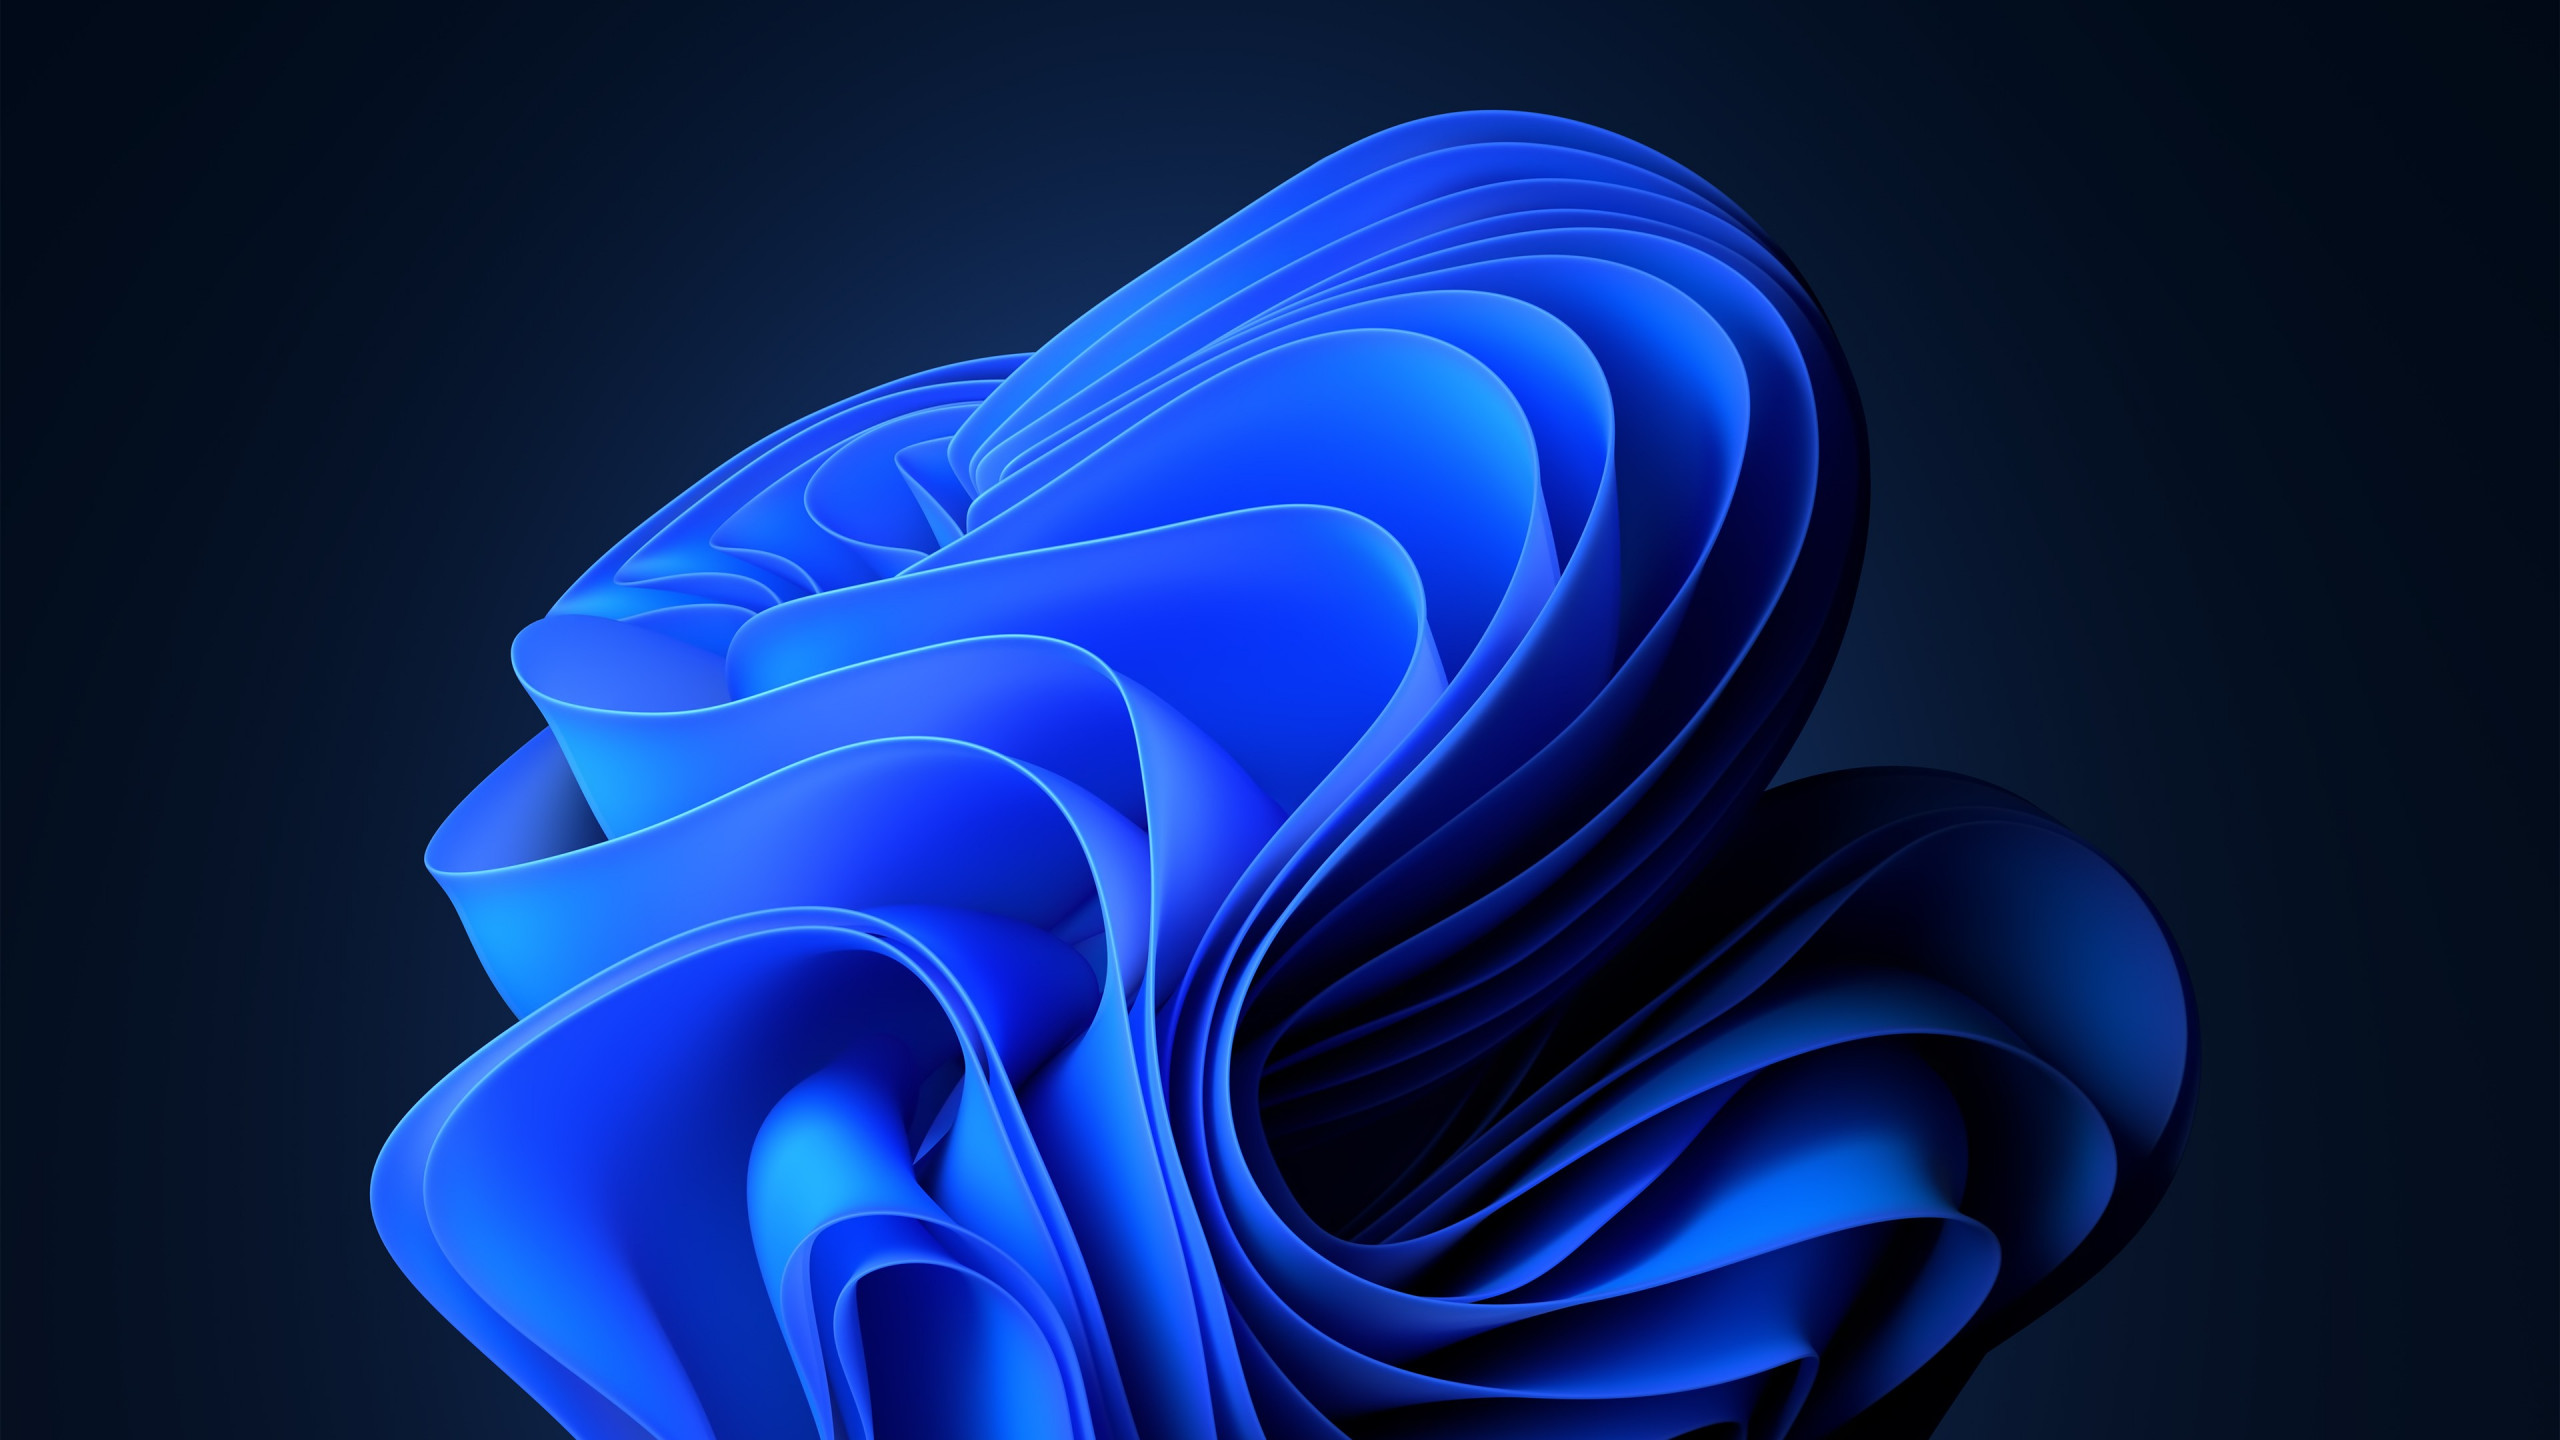 Windows 11 blue abstract wallpaper 2560x1440